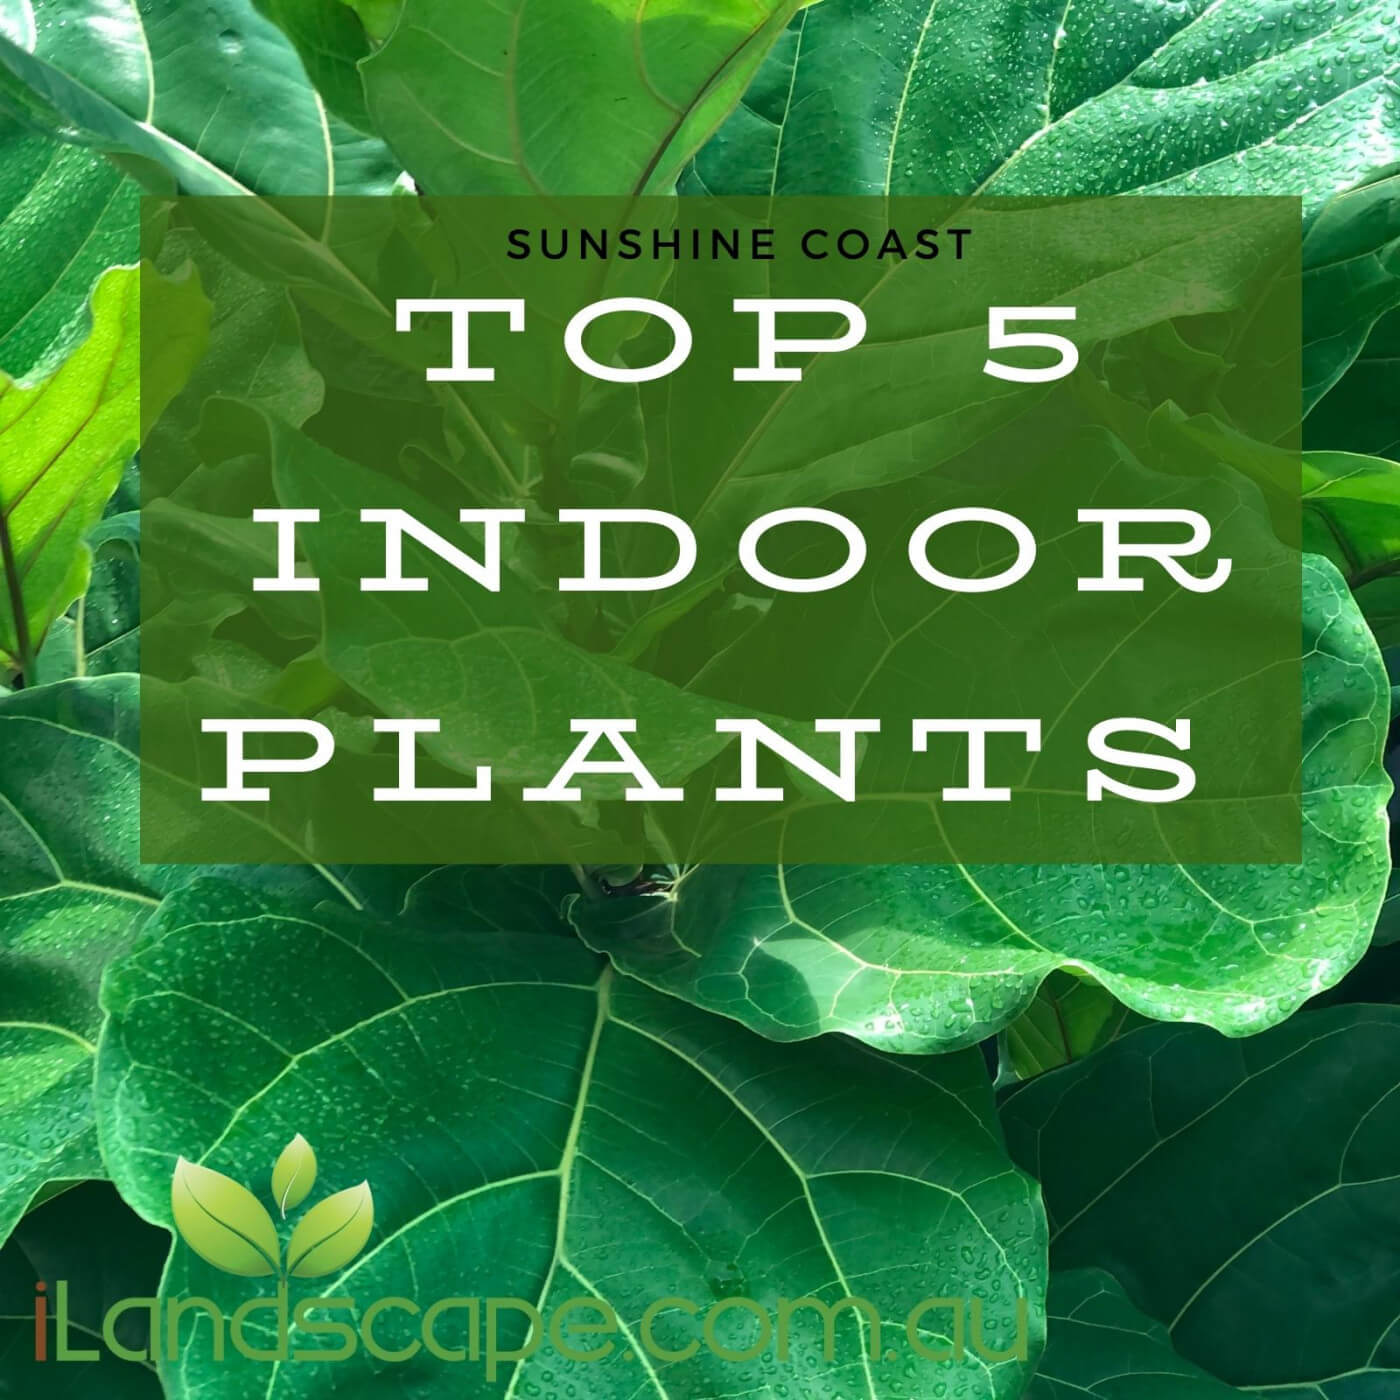 Top 5 Indoor Plants on the Sunshine Coast